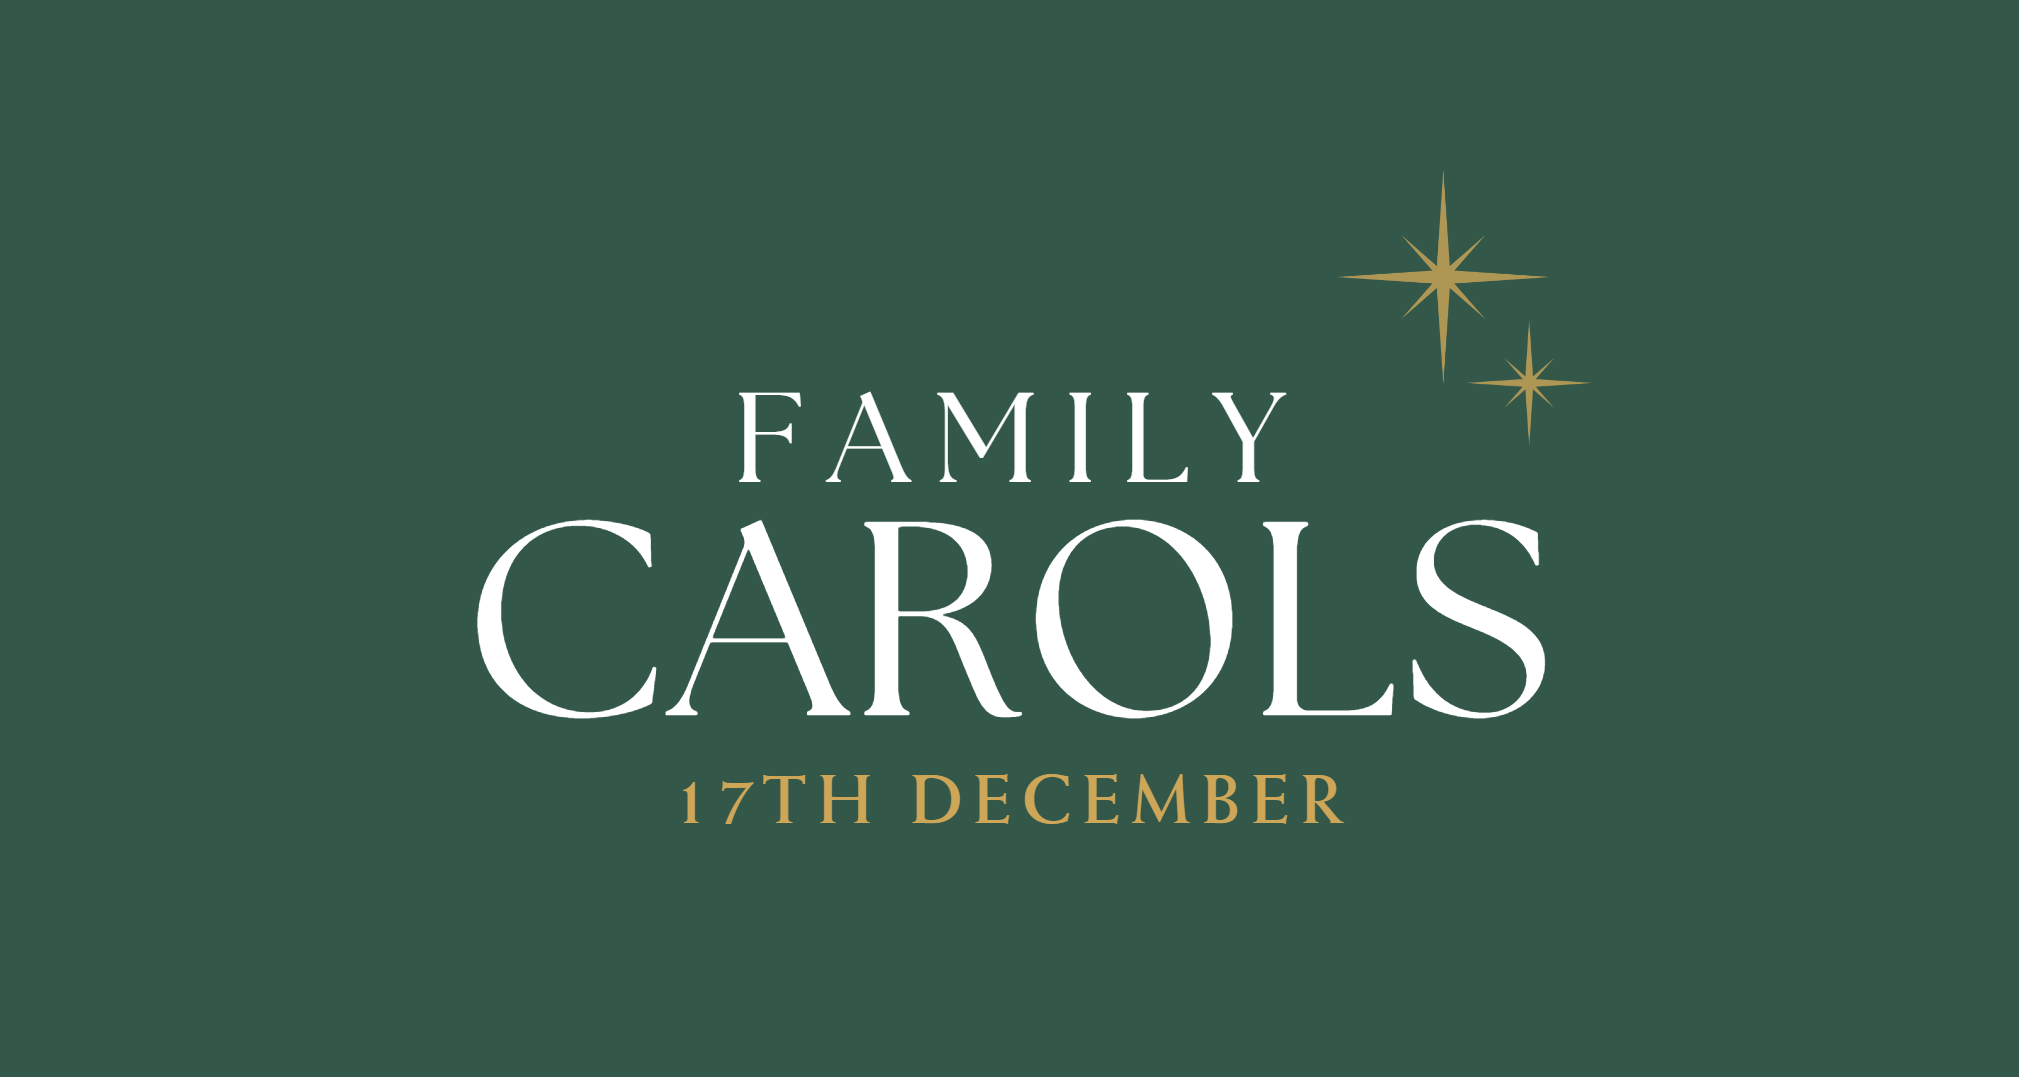 Family Carol Service